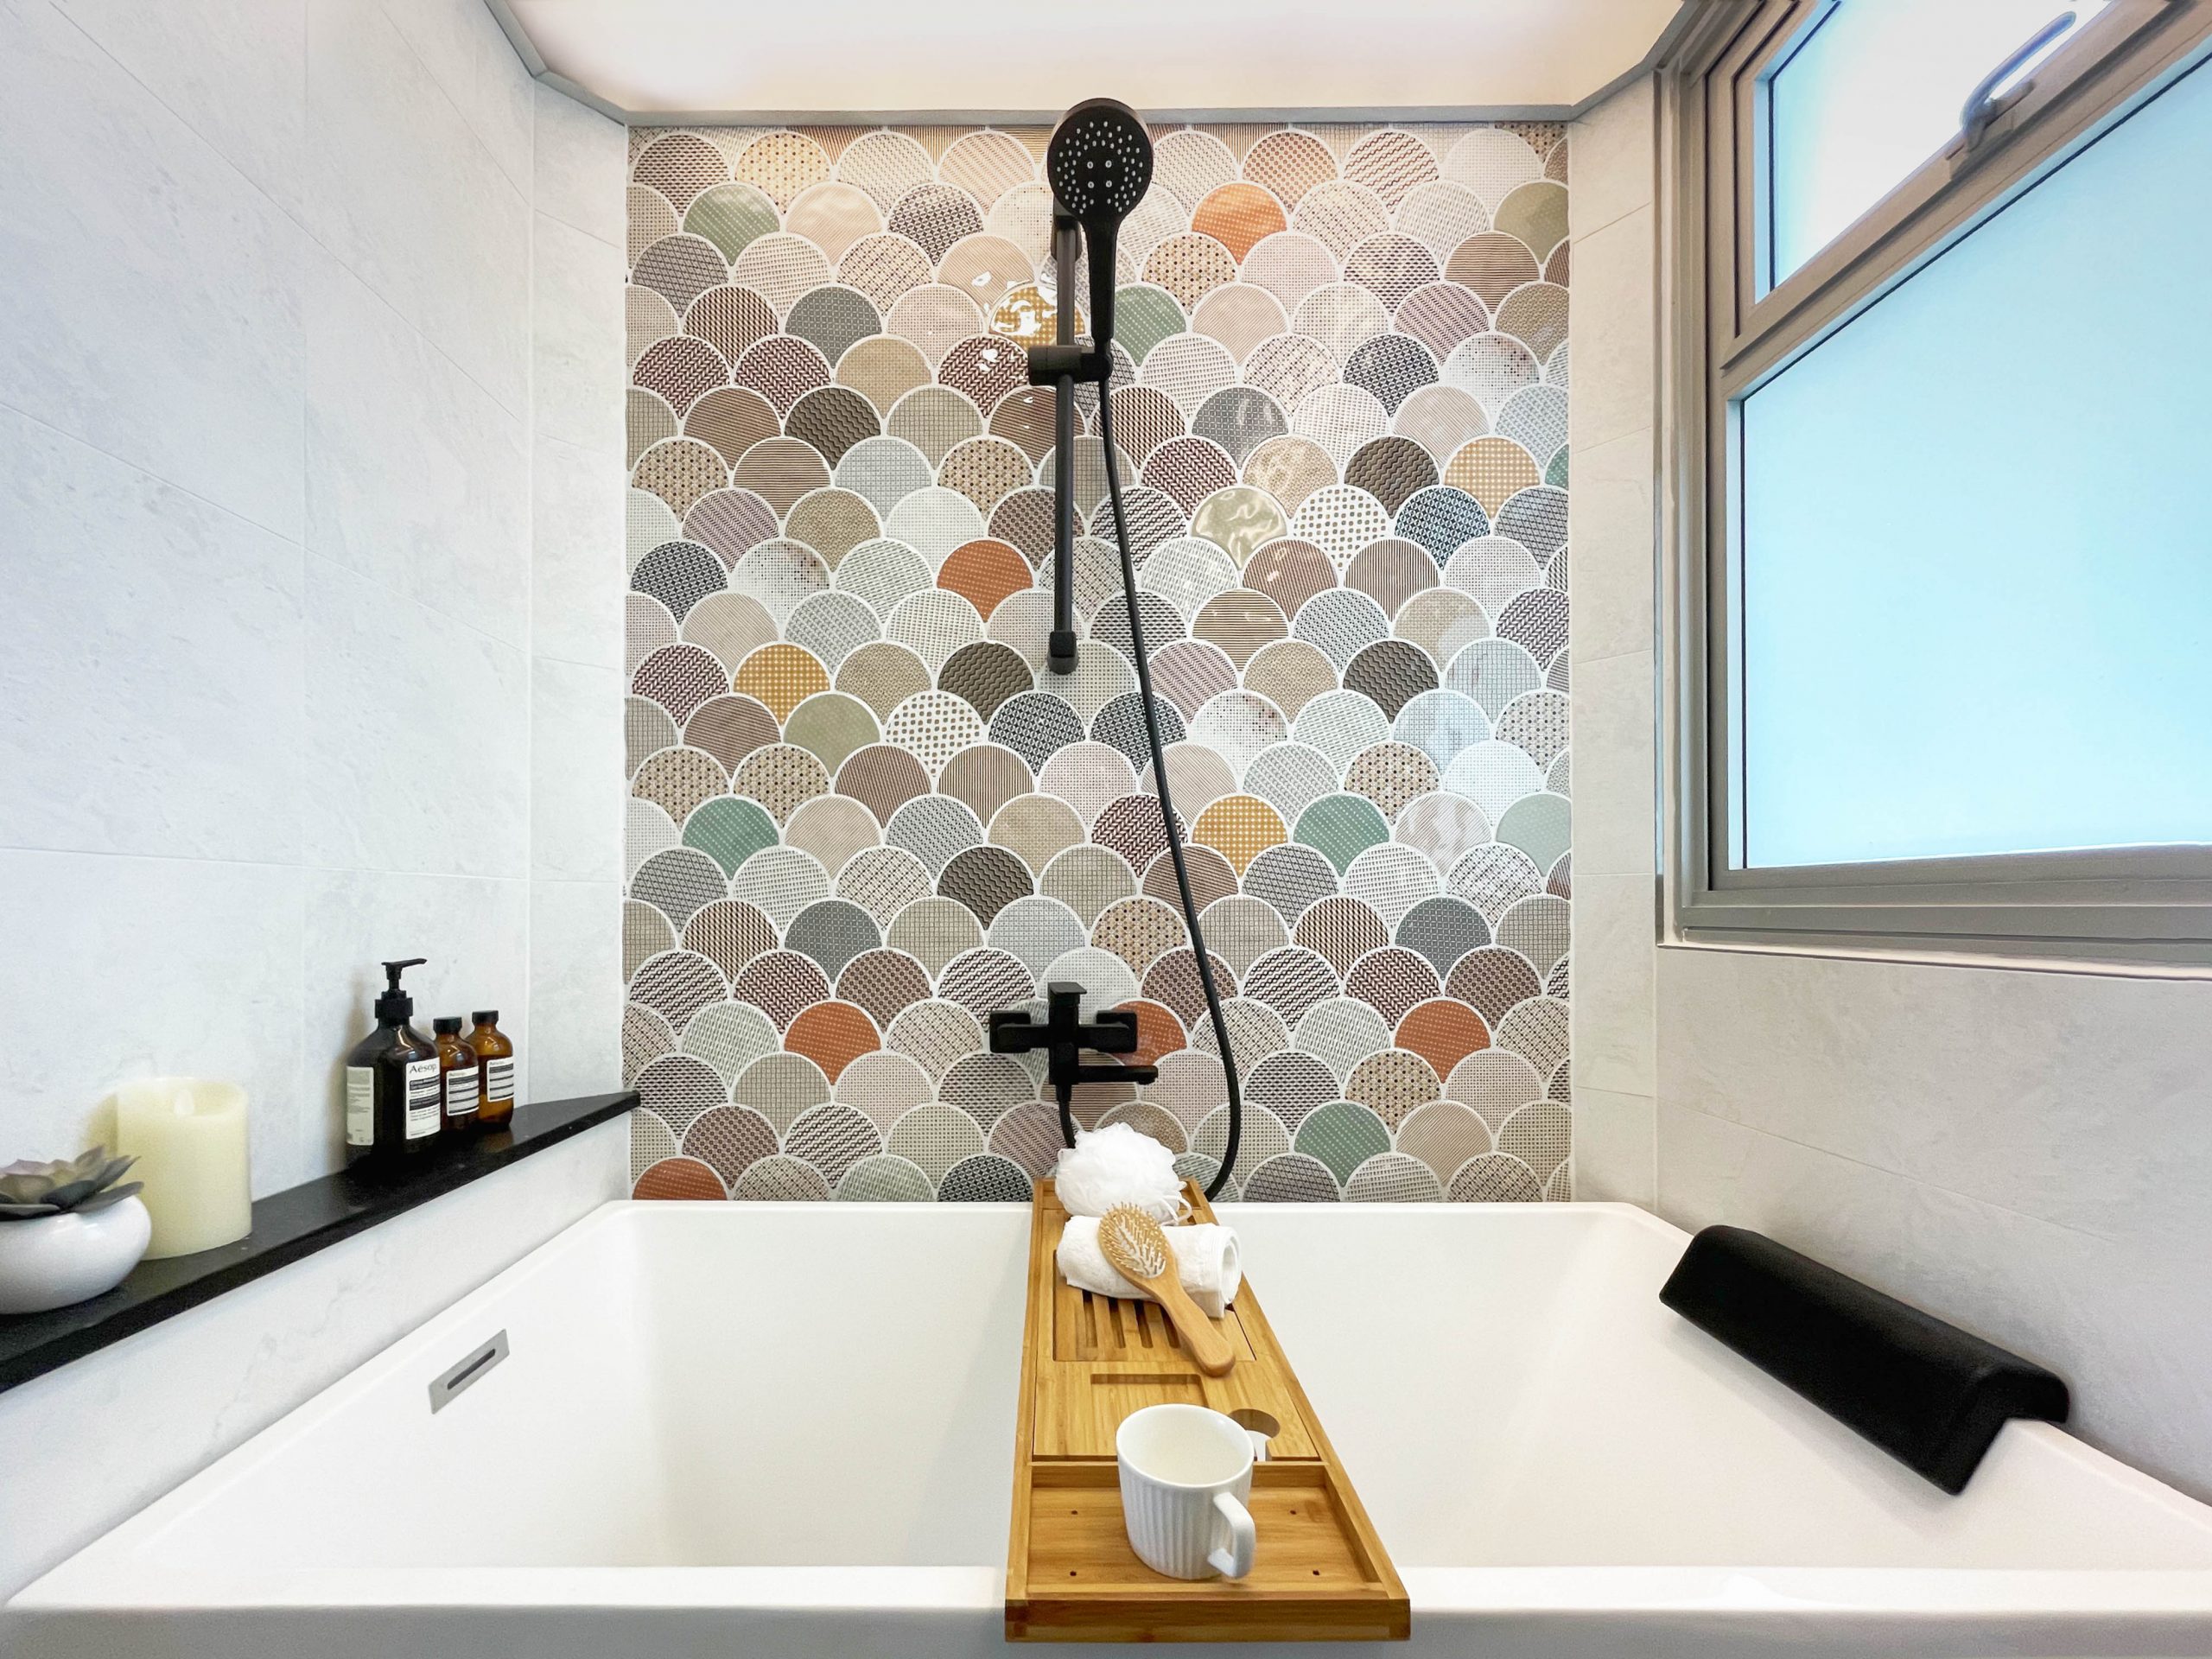 Jalan Tenteram Feminine Interior Design for Master Bedroom Toilet using Colourful Scallop Tiles for Backsplash to Bath Tub in Singapore Apartment